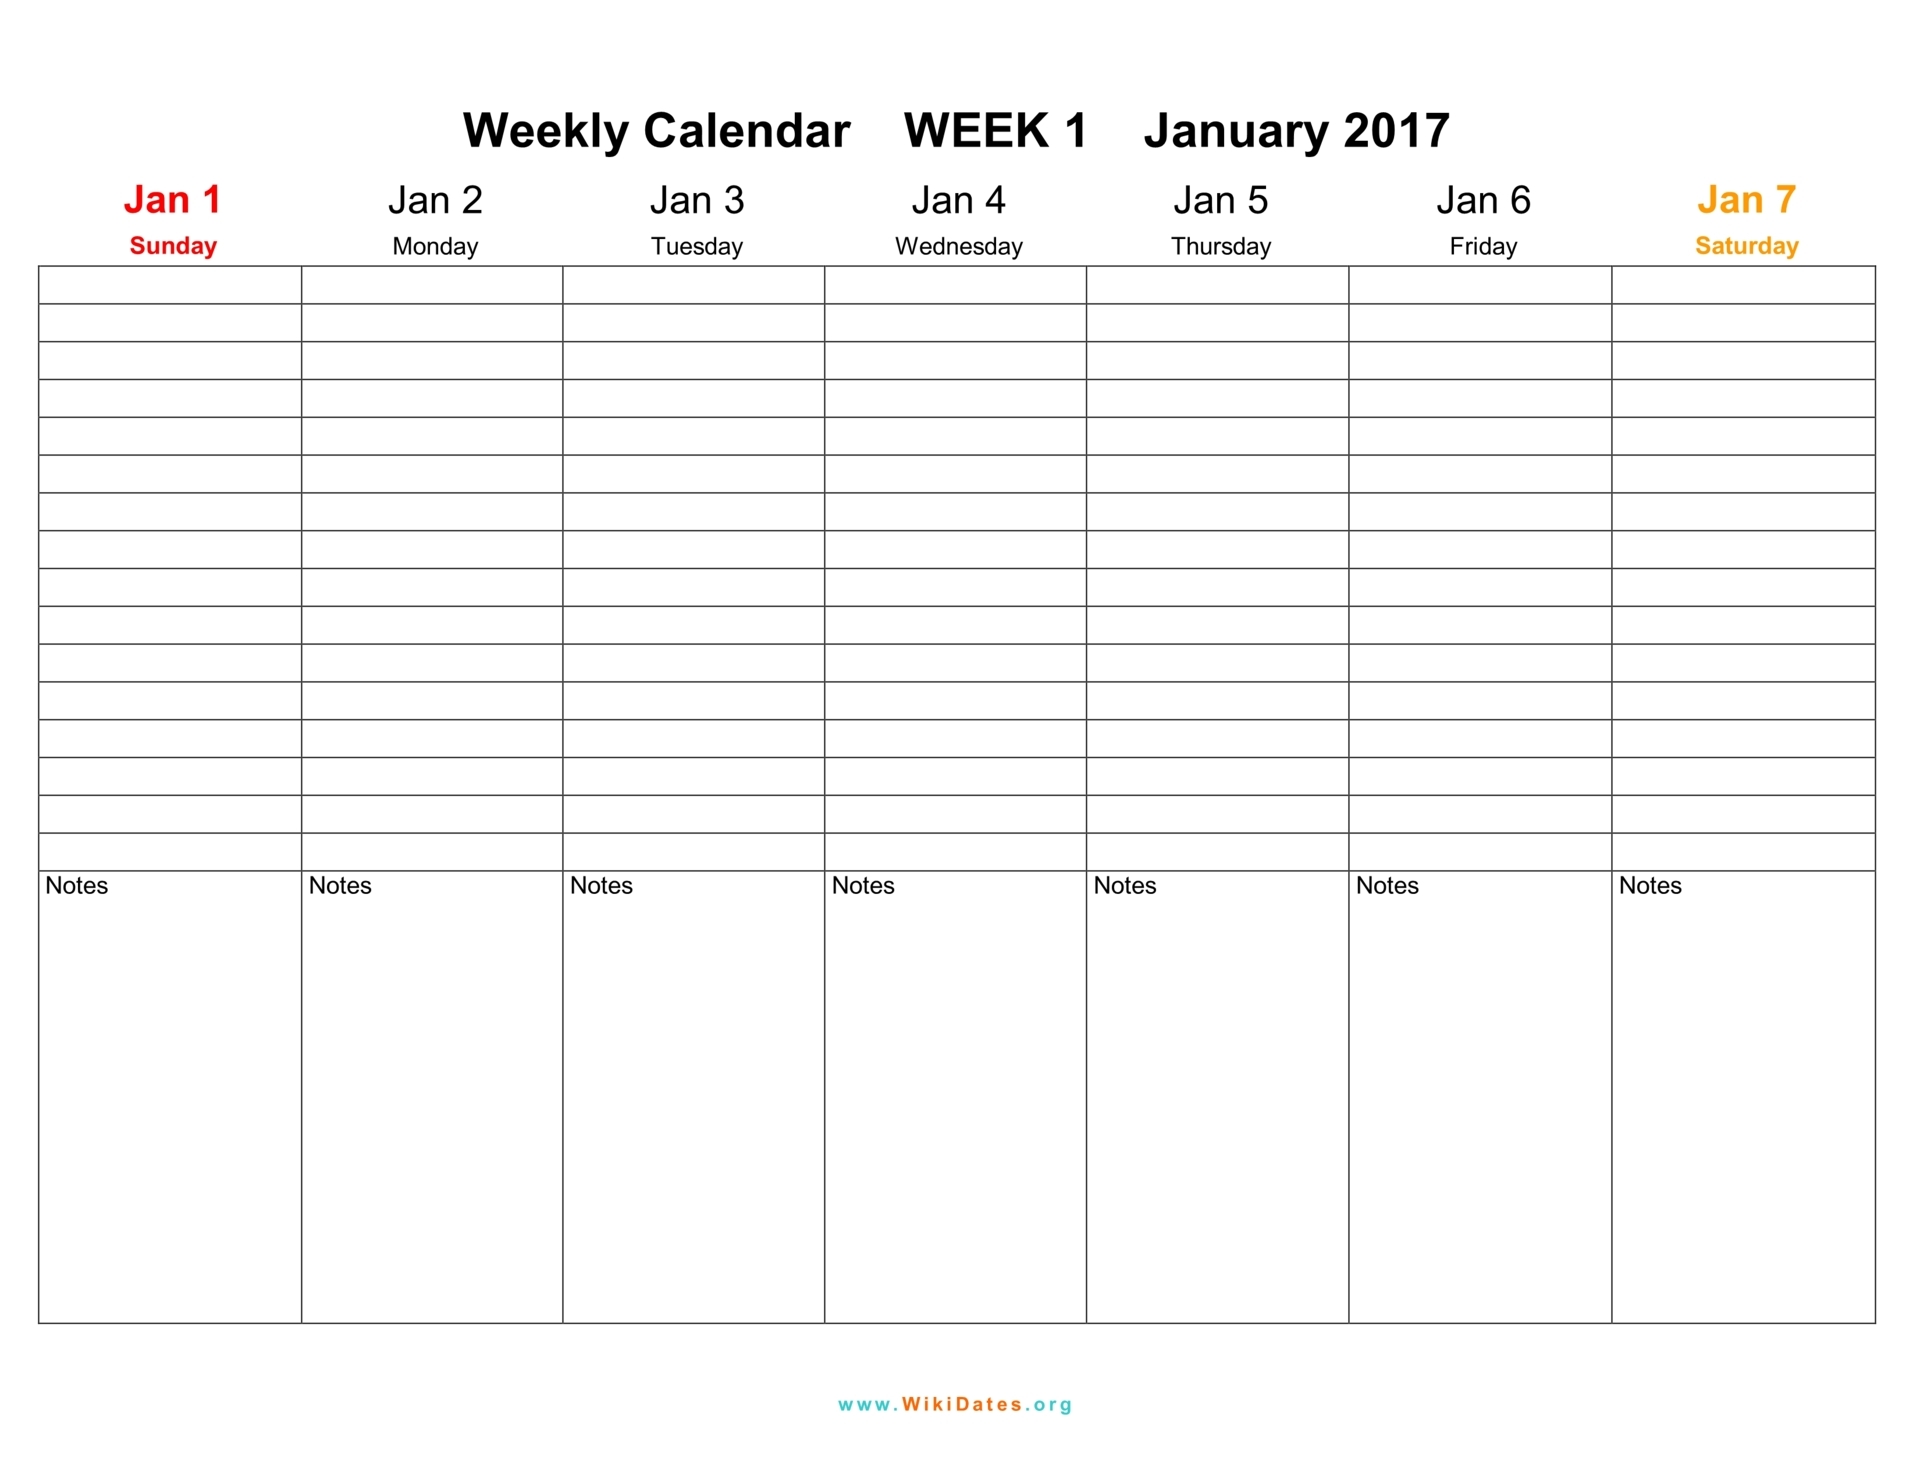 weekly-calendar-download-weekly-calendar-2017-and-2018-wikidates